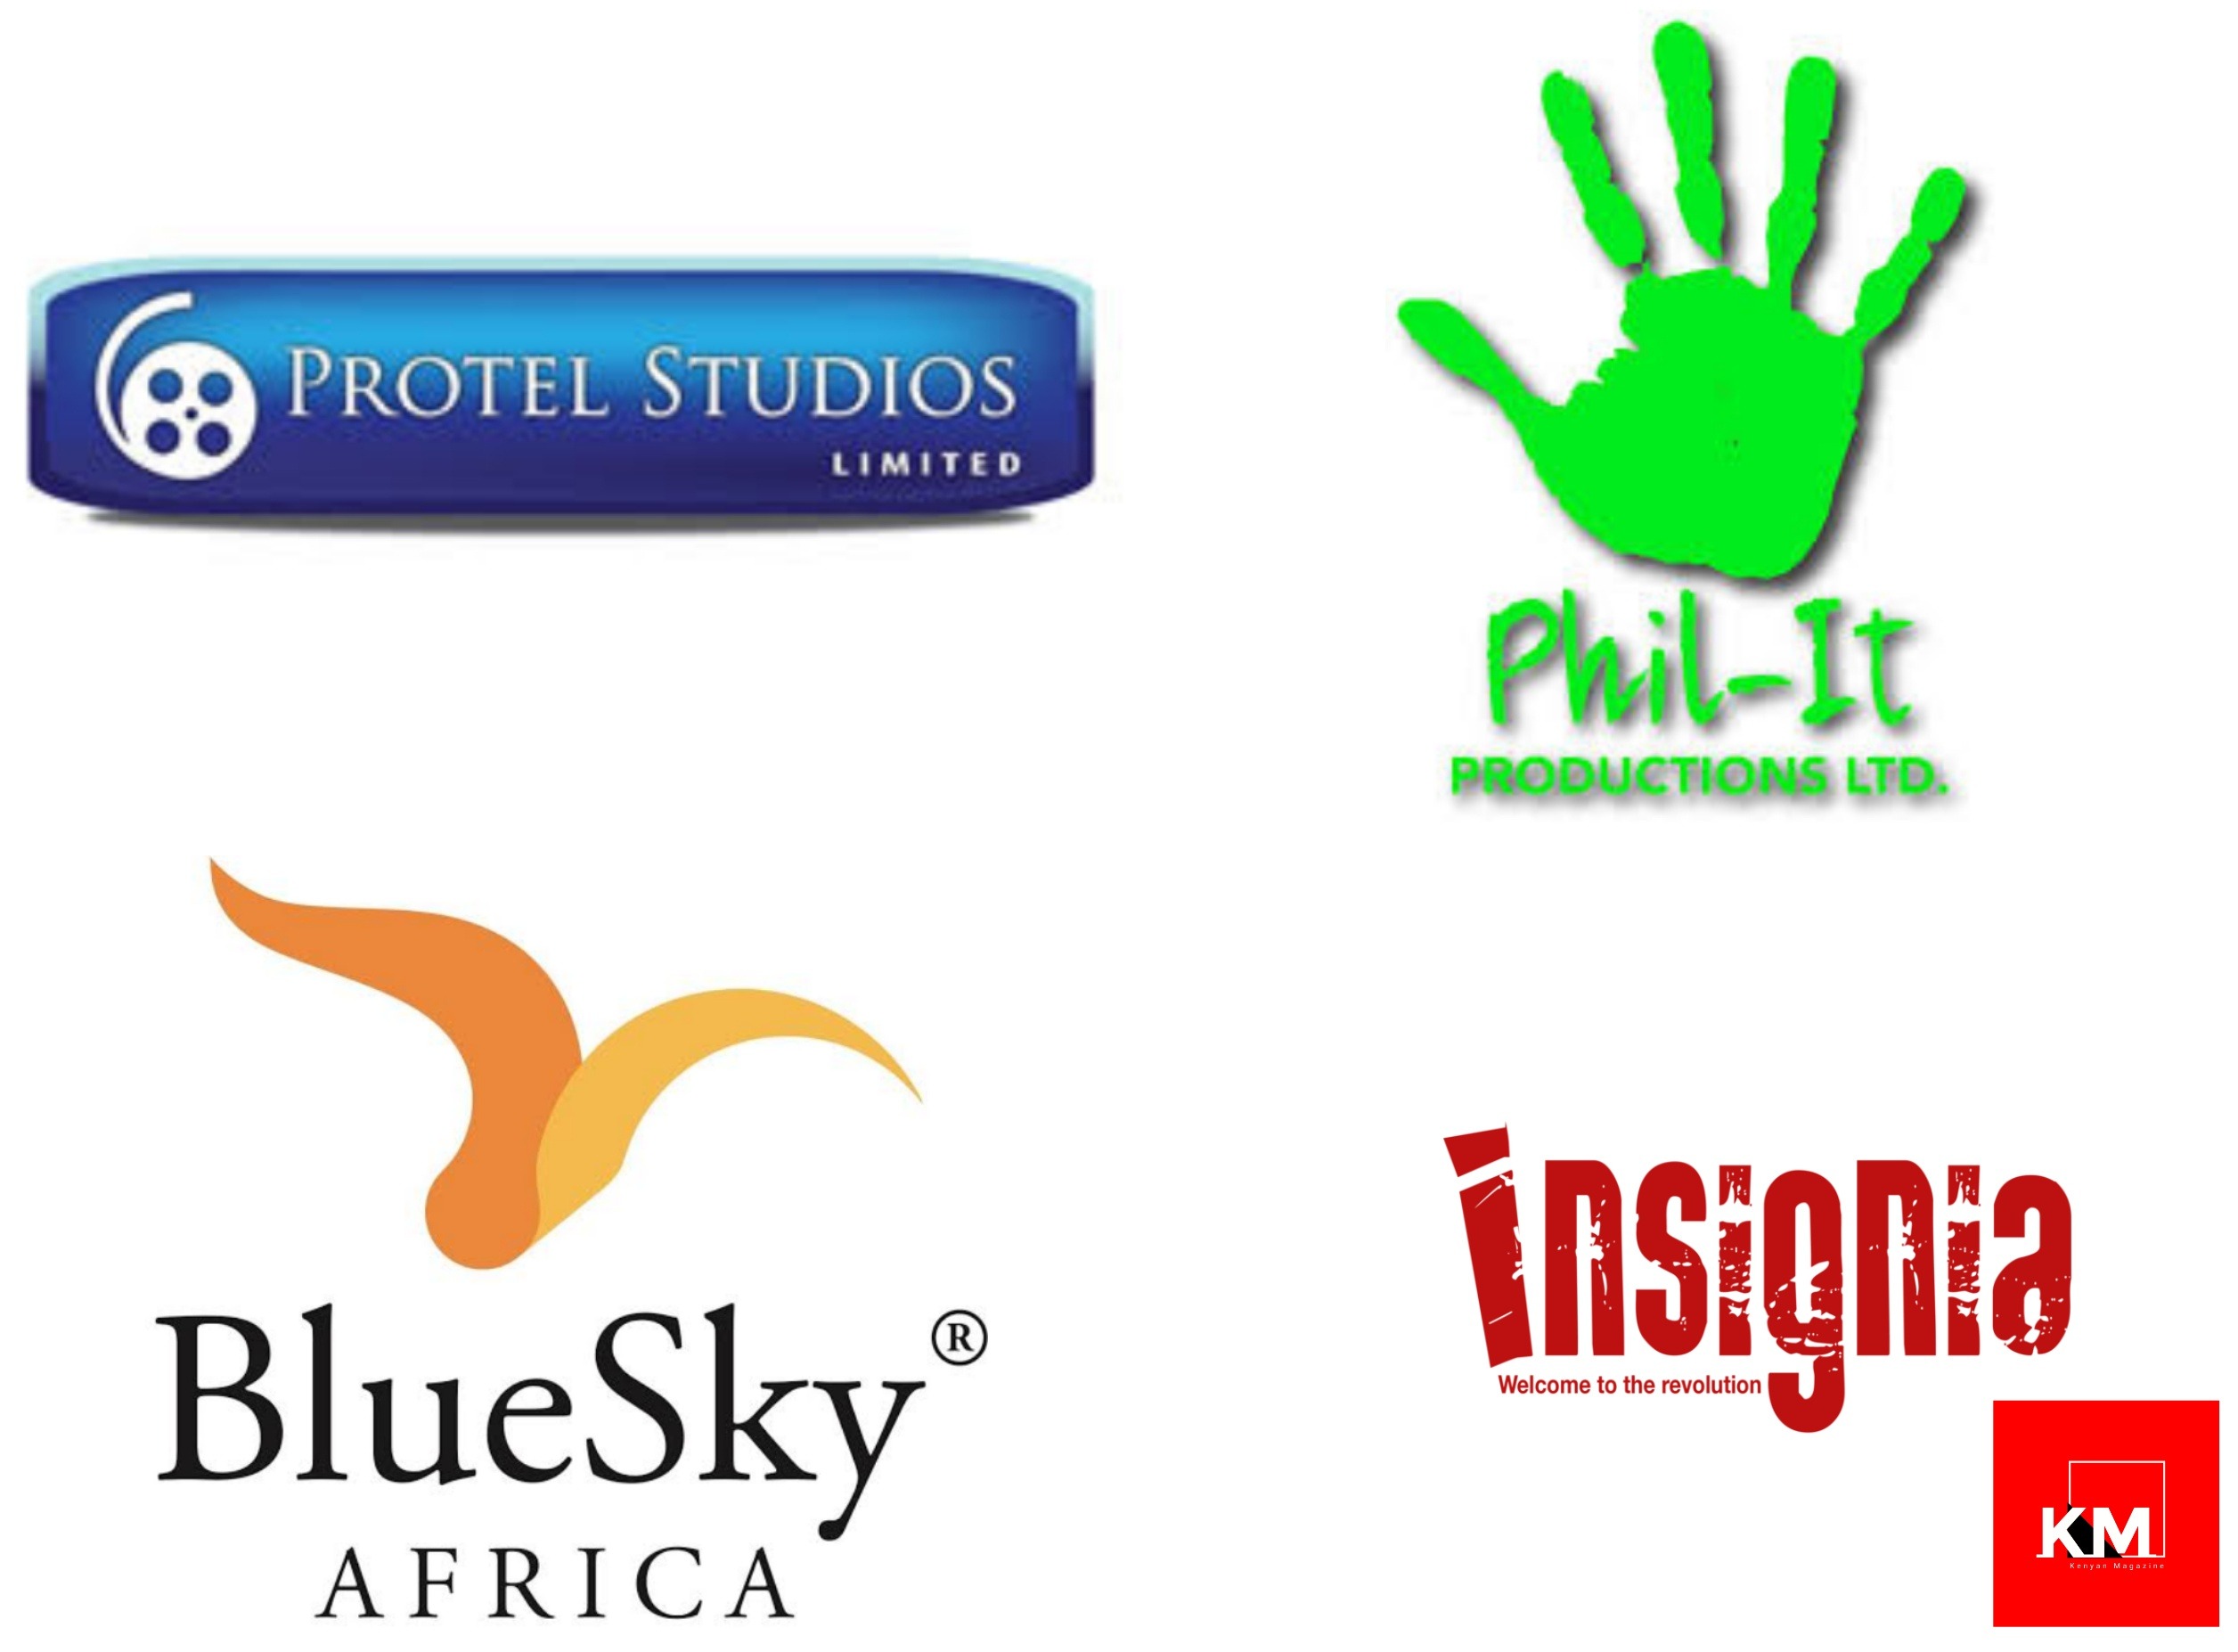 Production companies in Kenya